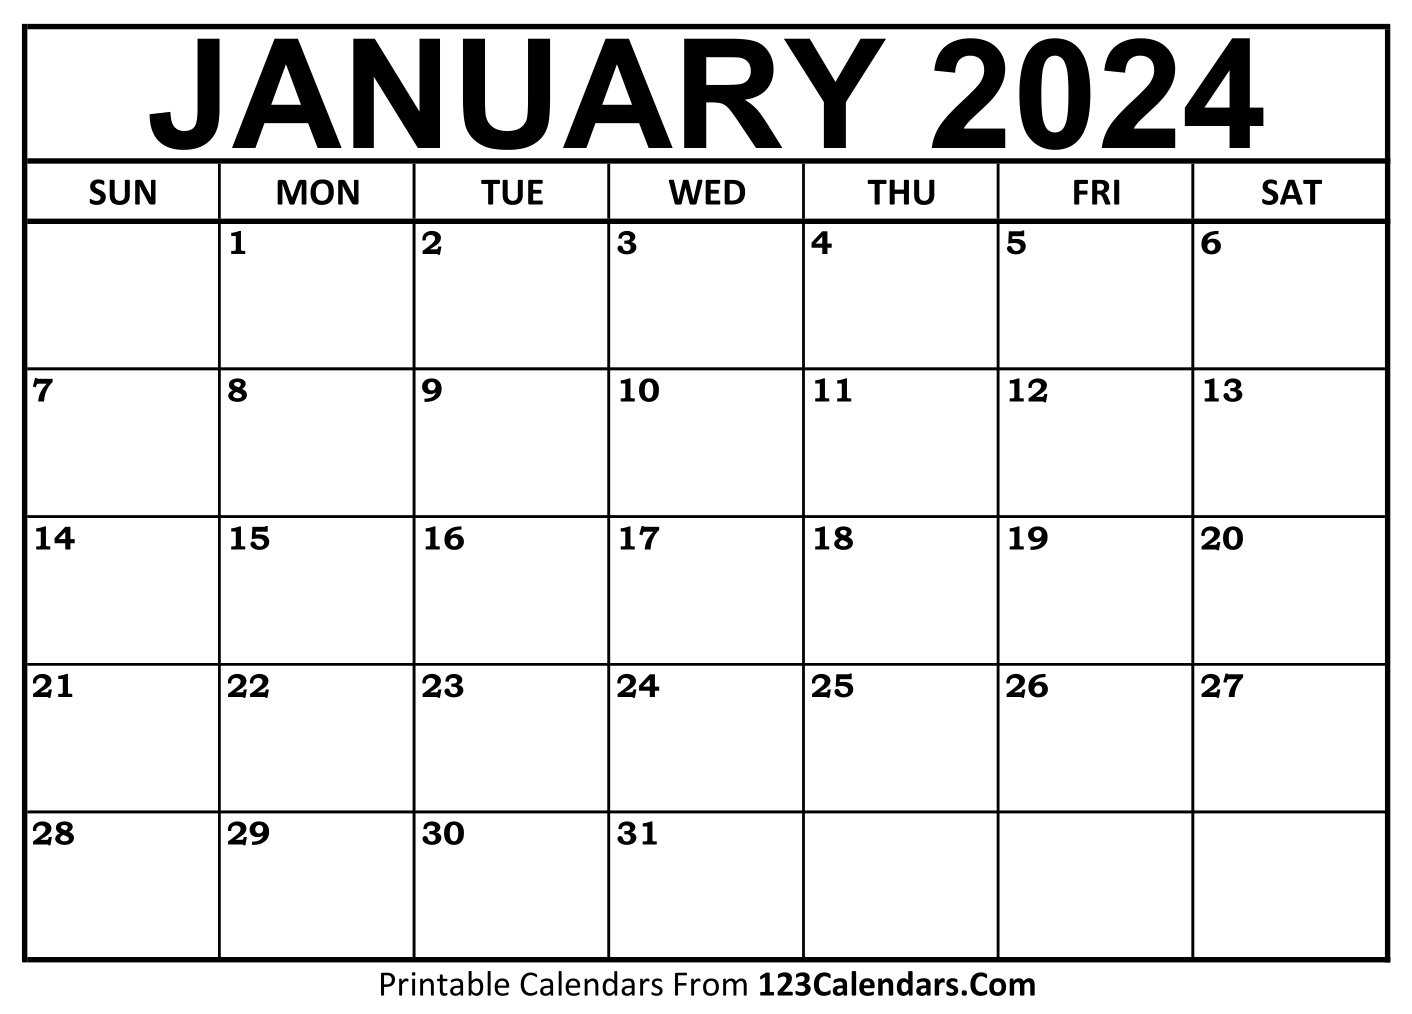 Printable January 2024 Calendar Templates - 123Calendars | Free Printable Calendar 2024 Wiki Calendar